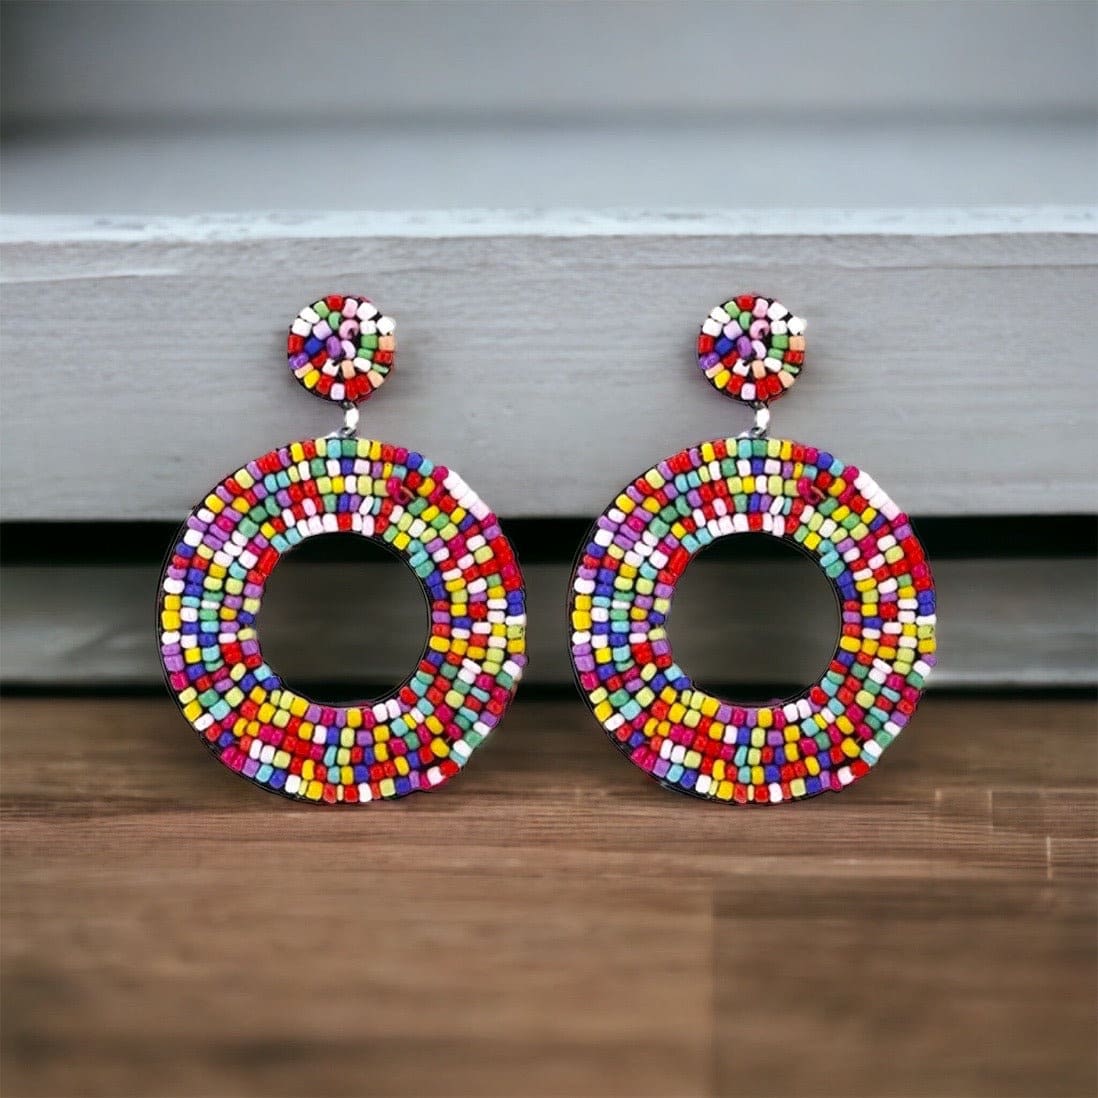 Colorful Boho Earrings - Festival Outfit, Boho Earrings, Bohemian Style, Rainbow Beaded, Rainbow Earrings, Beaded Accessories